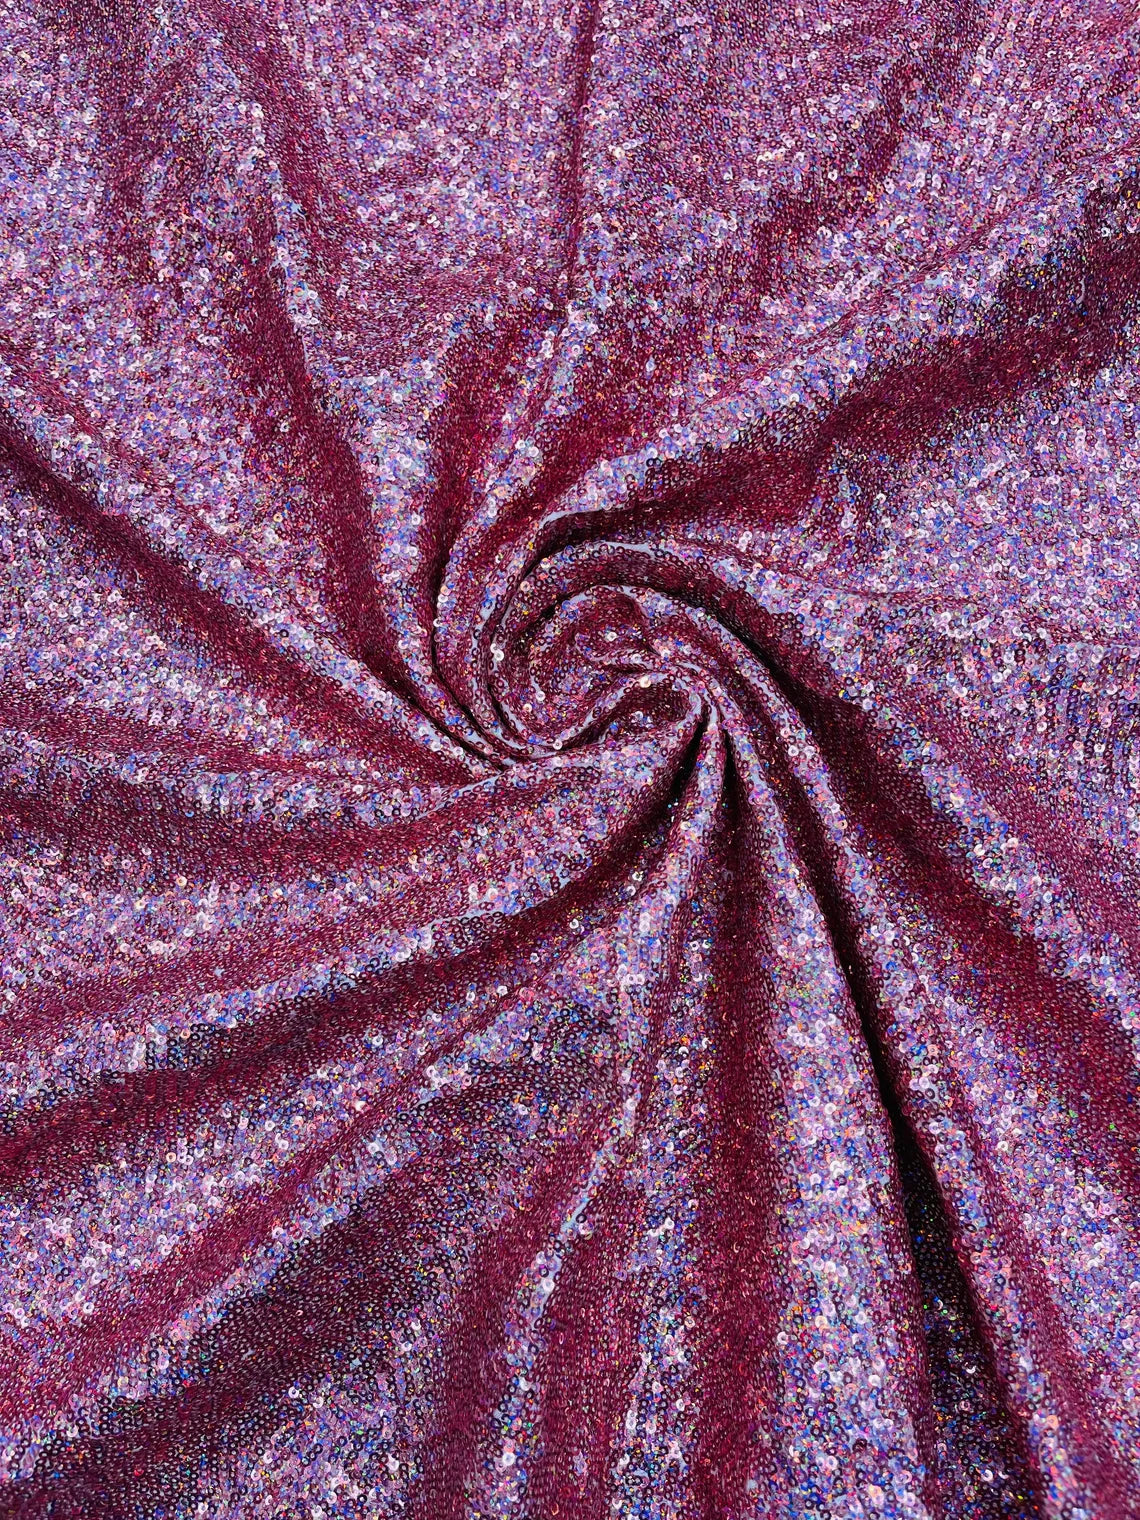 Mini Glitz Sequins on Milliskin - Dusty Rose - 4 Way Stretch Milliskin Stretch Spandex Fabric by Yard